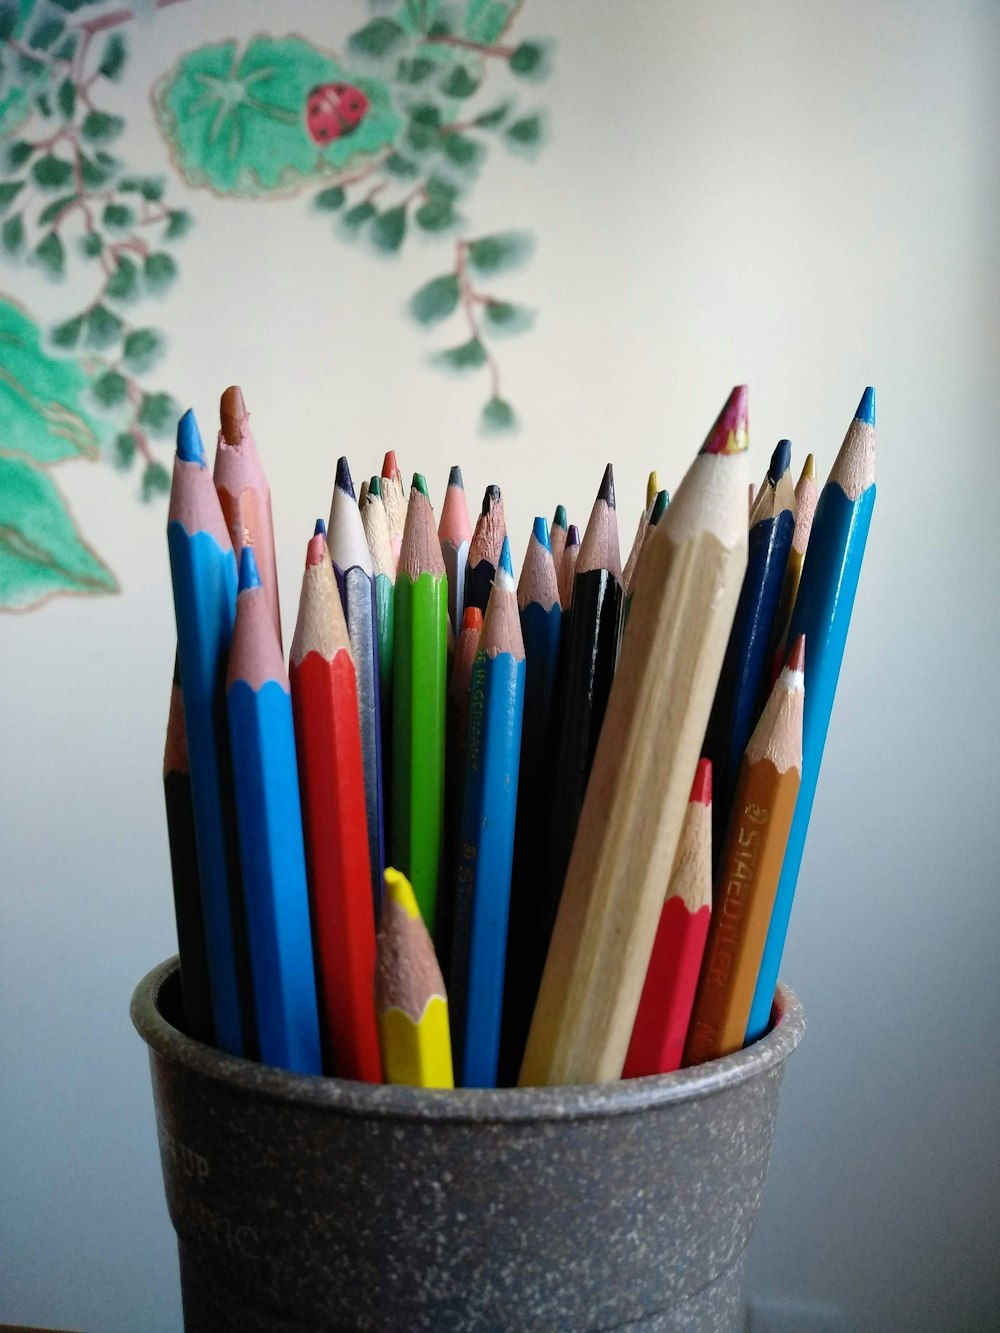 999+ Color Pencil Pictures  Download Free Images on Unsplash